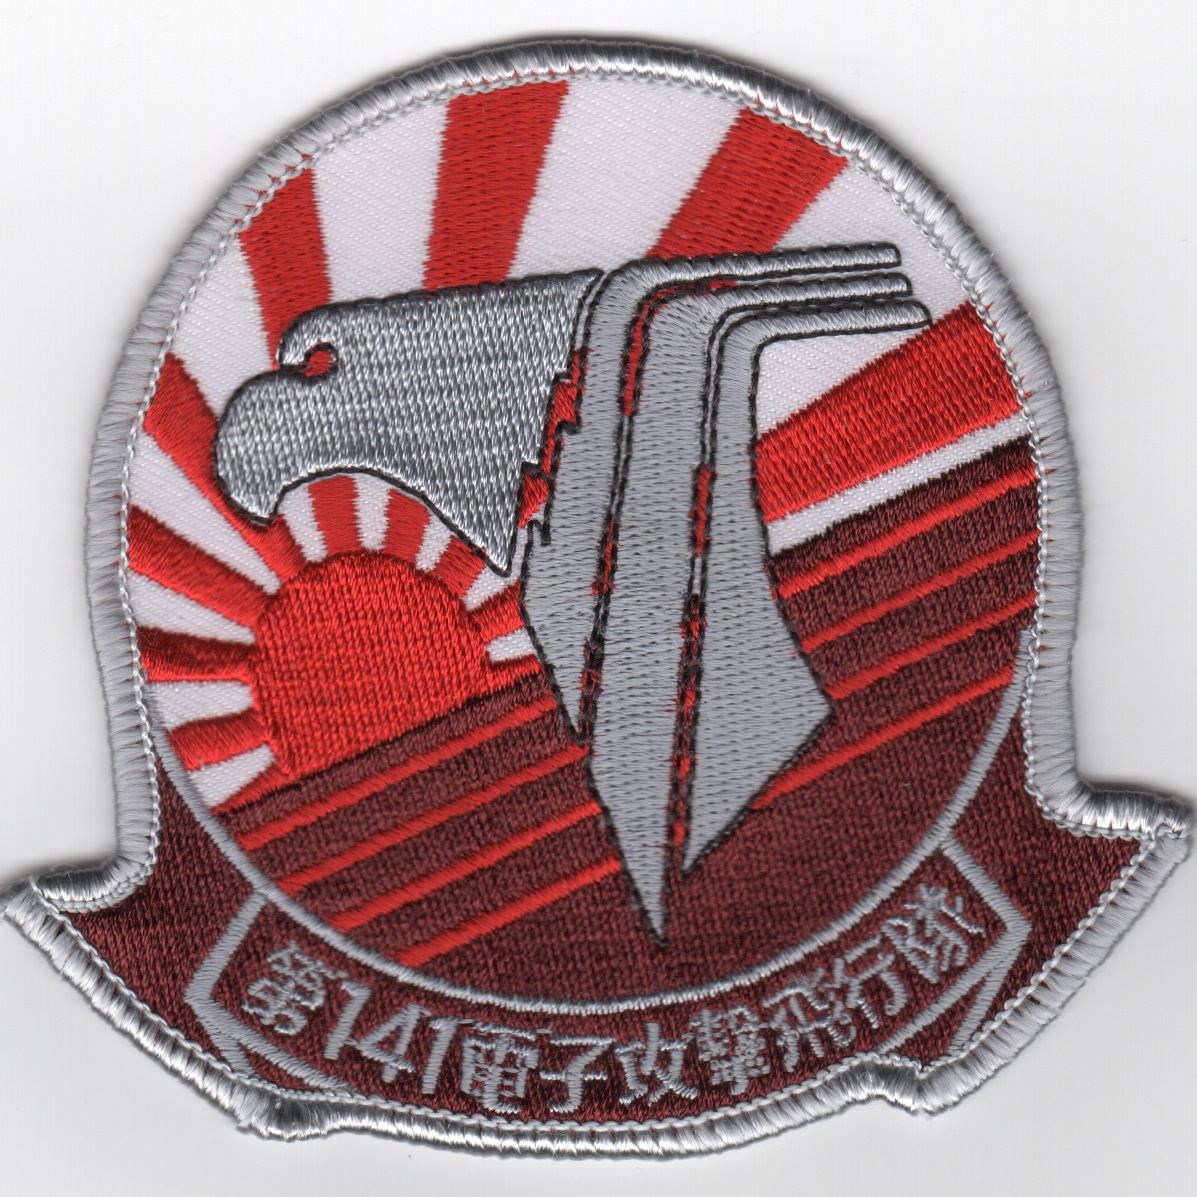 VAQ-141 Squadron Patch (Japanese)